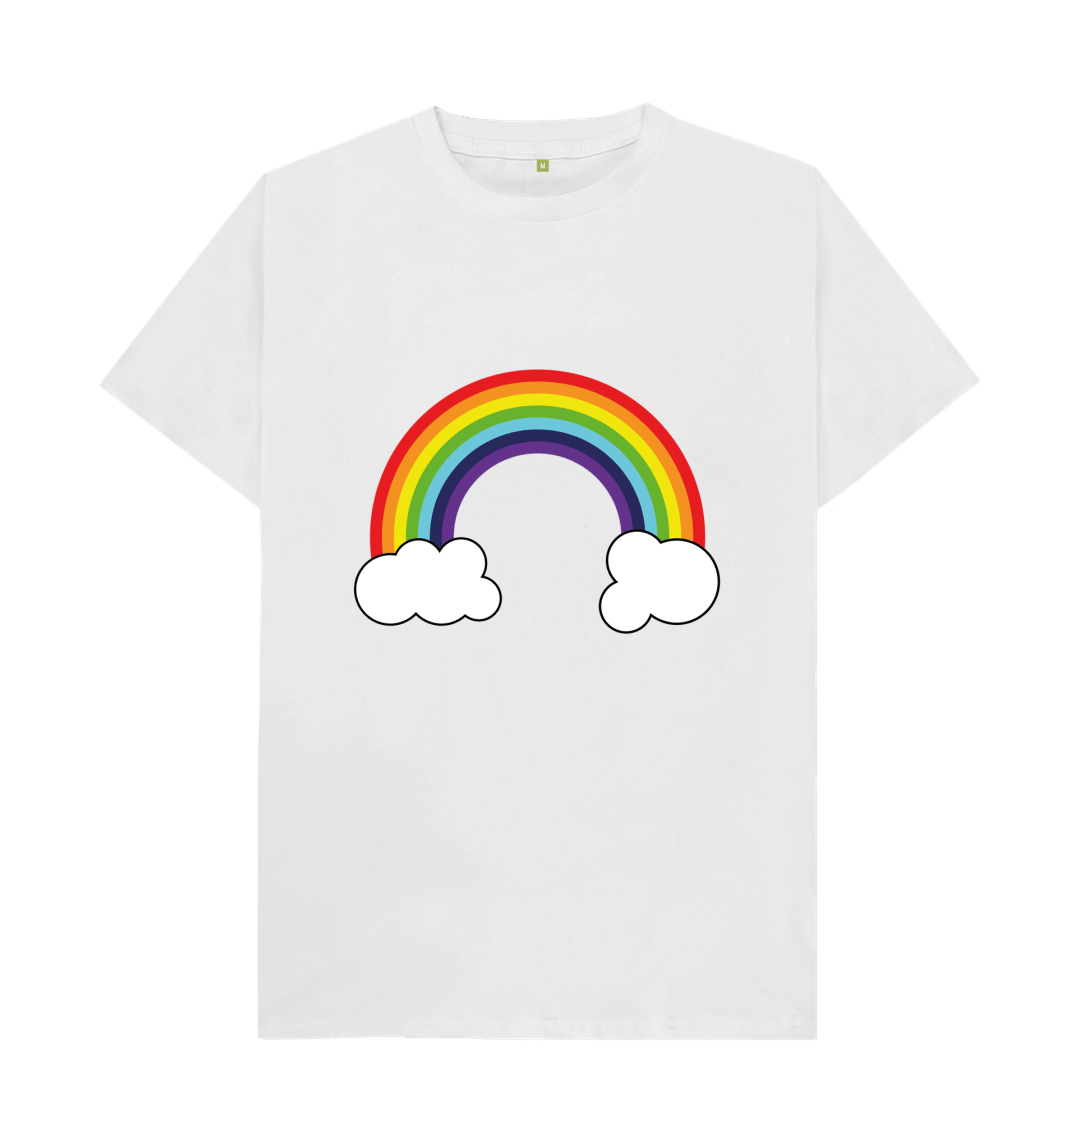 White Organic Cotton Rainbow Graphic Only Mental Health Men's T-Shirt